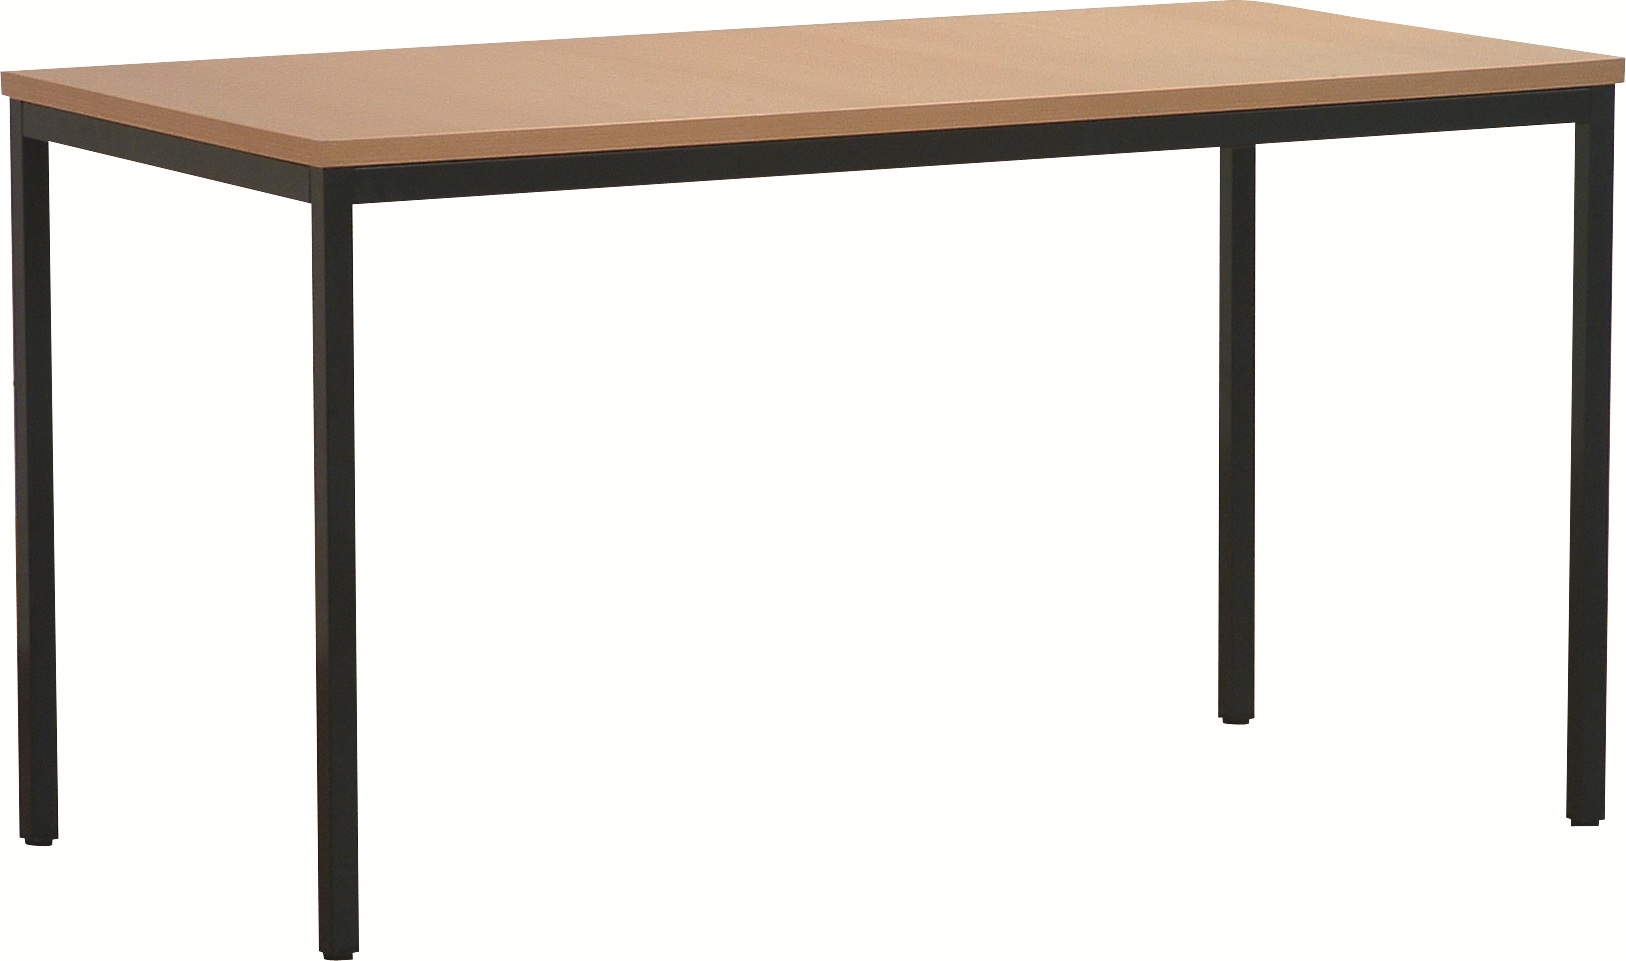 Fysica Scorch helaas Simpli multifunctionele tafel 180x80 cm | Eska office